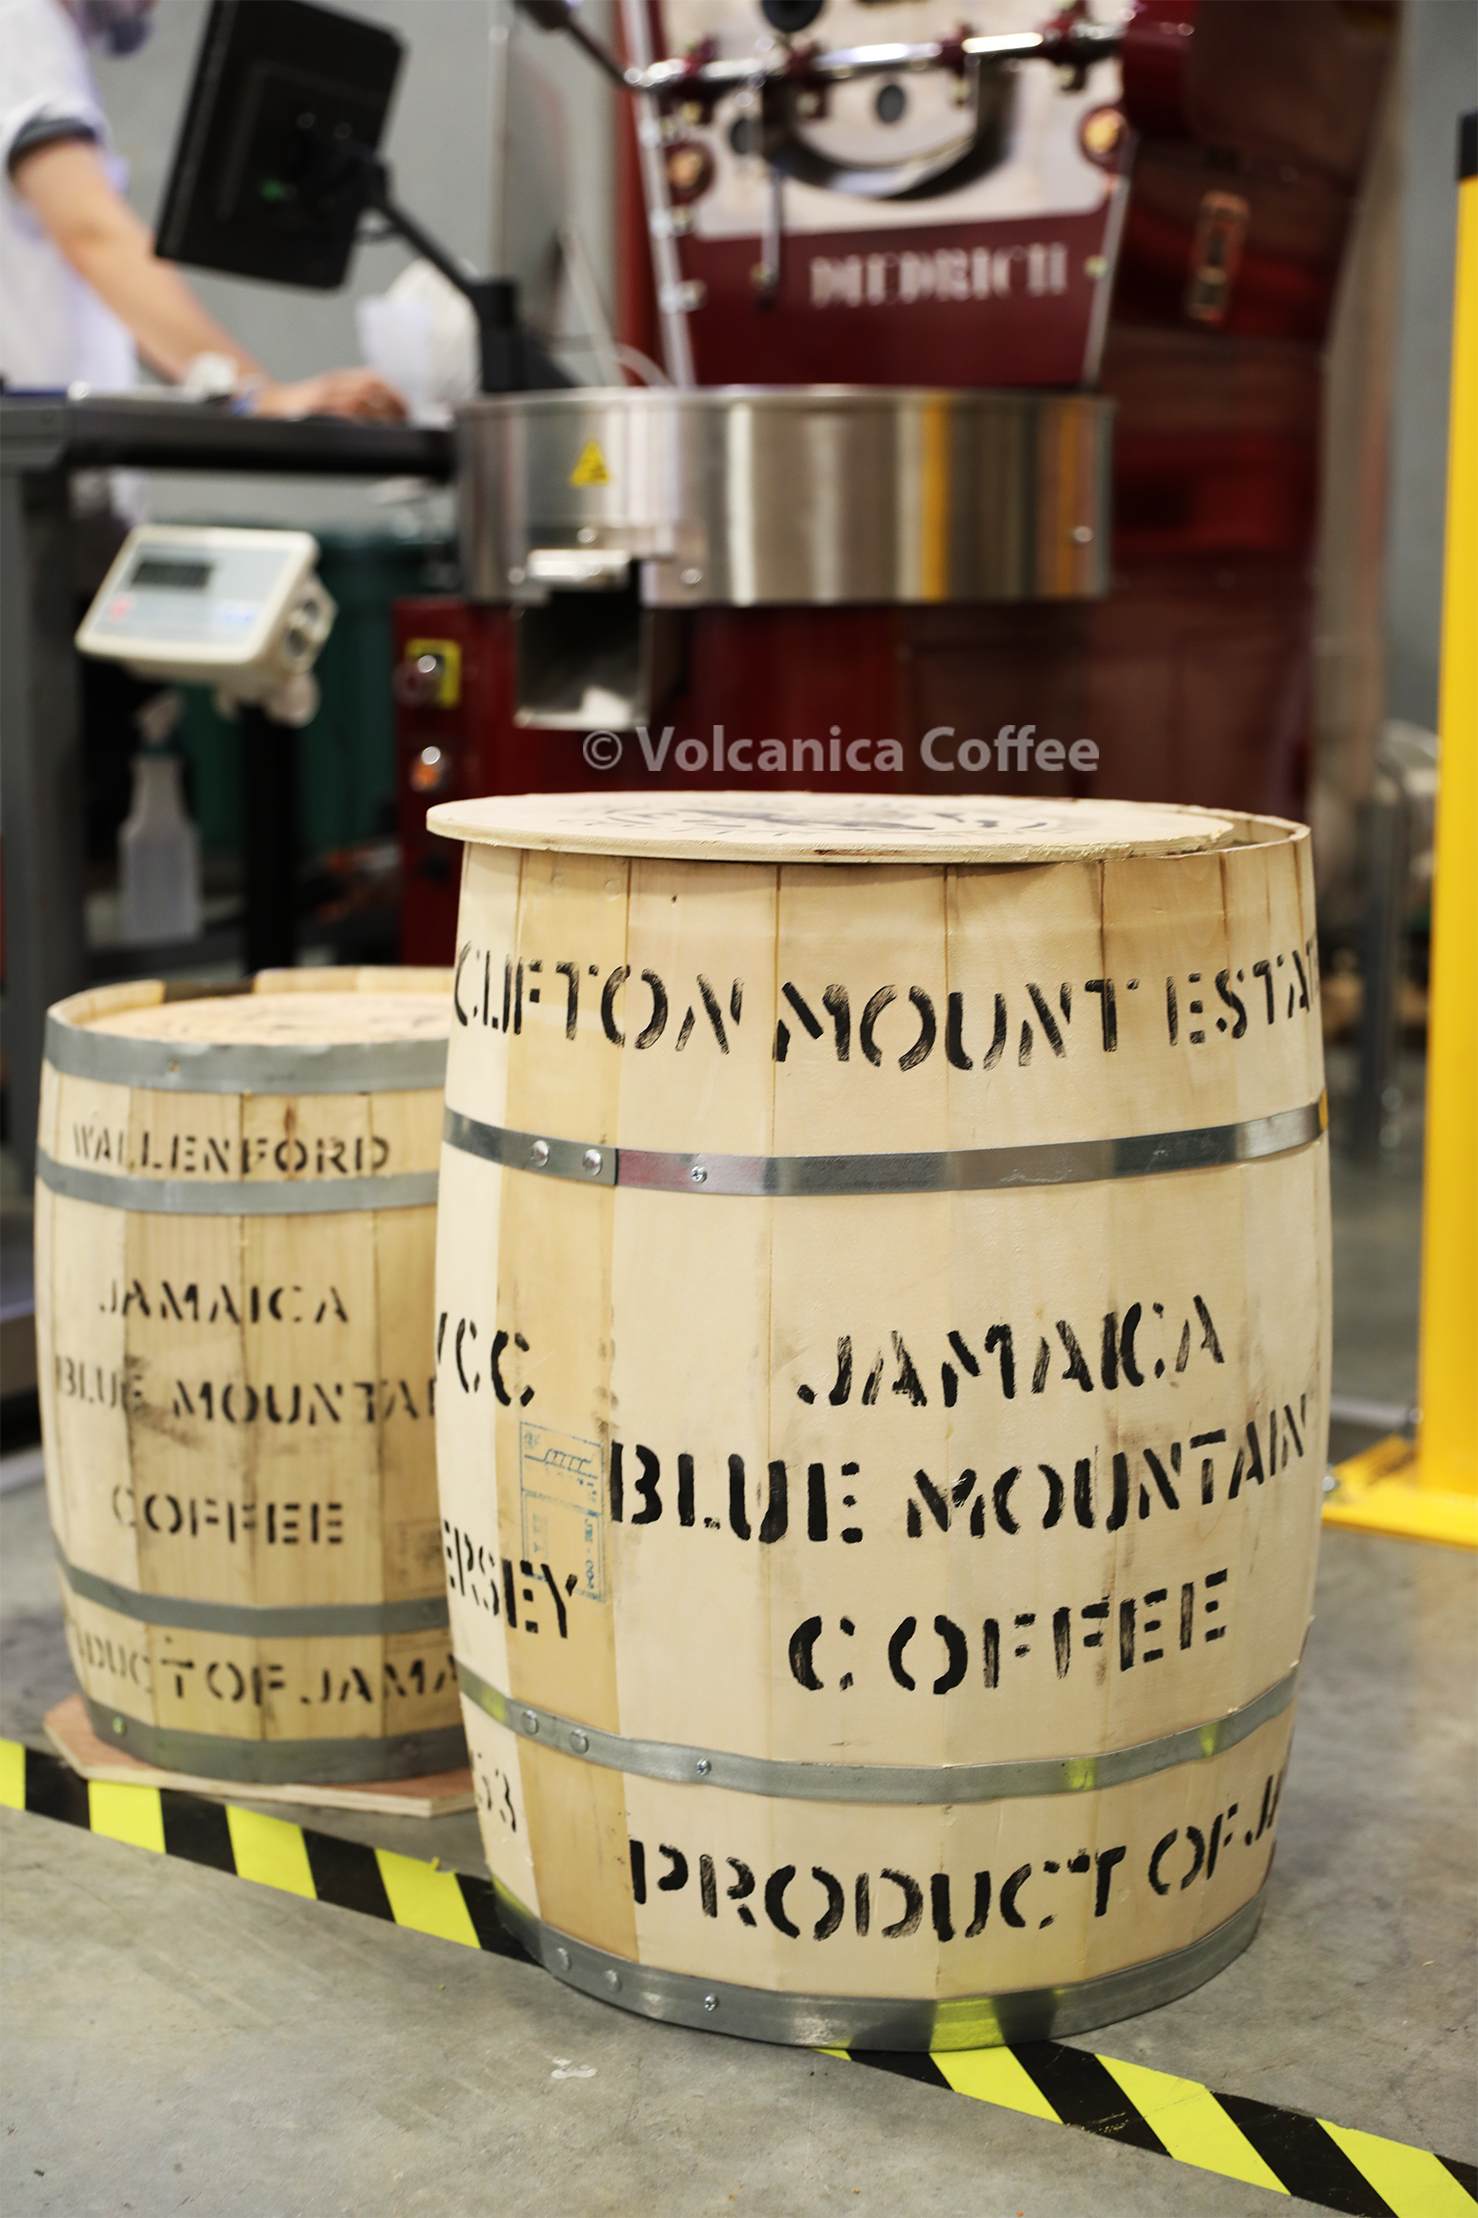 Jamaica Blue Mountain Gourmet Coffee